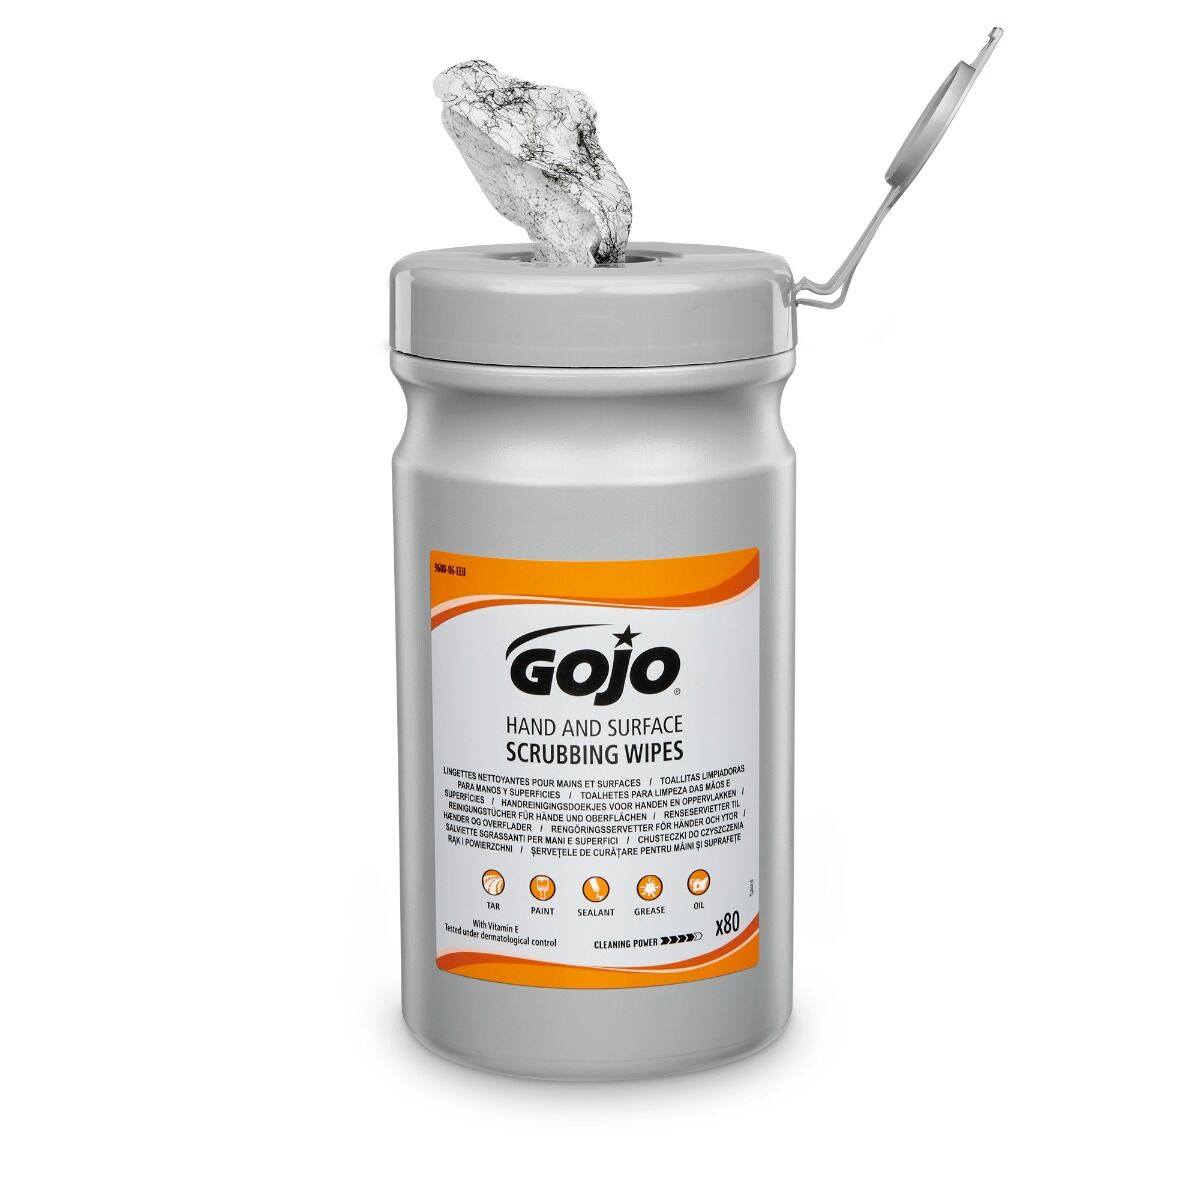 Gojo 9113-06 Purell Sanitizing Hand Wipes